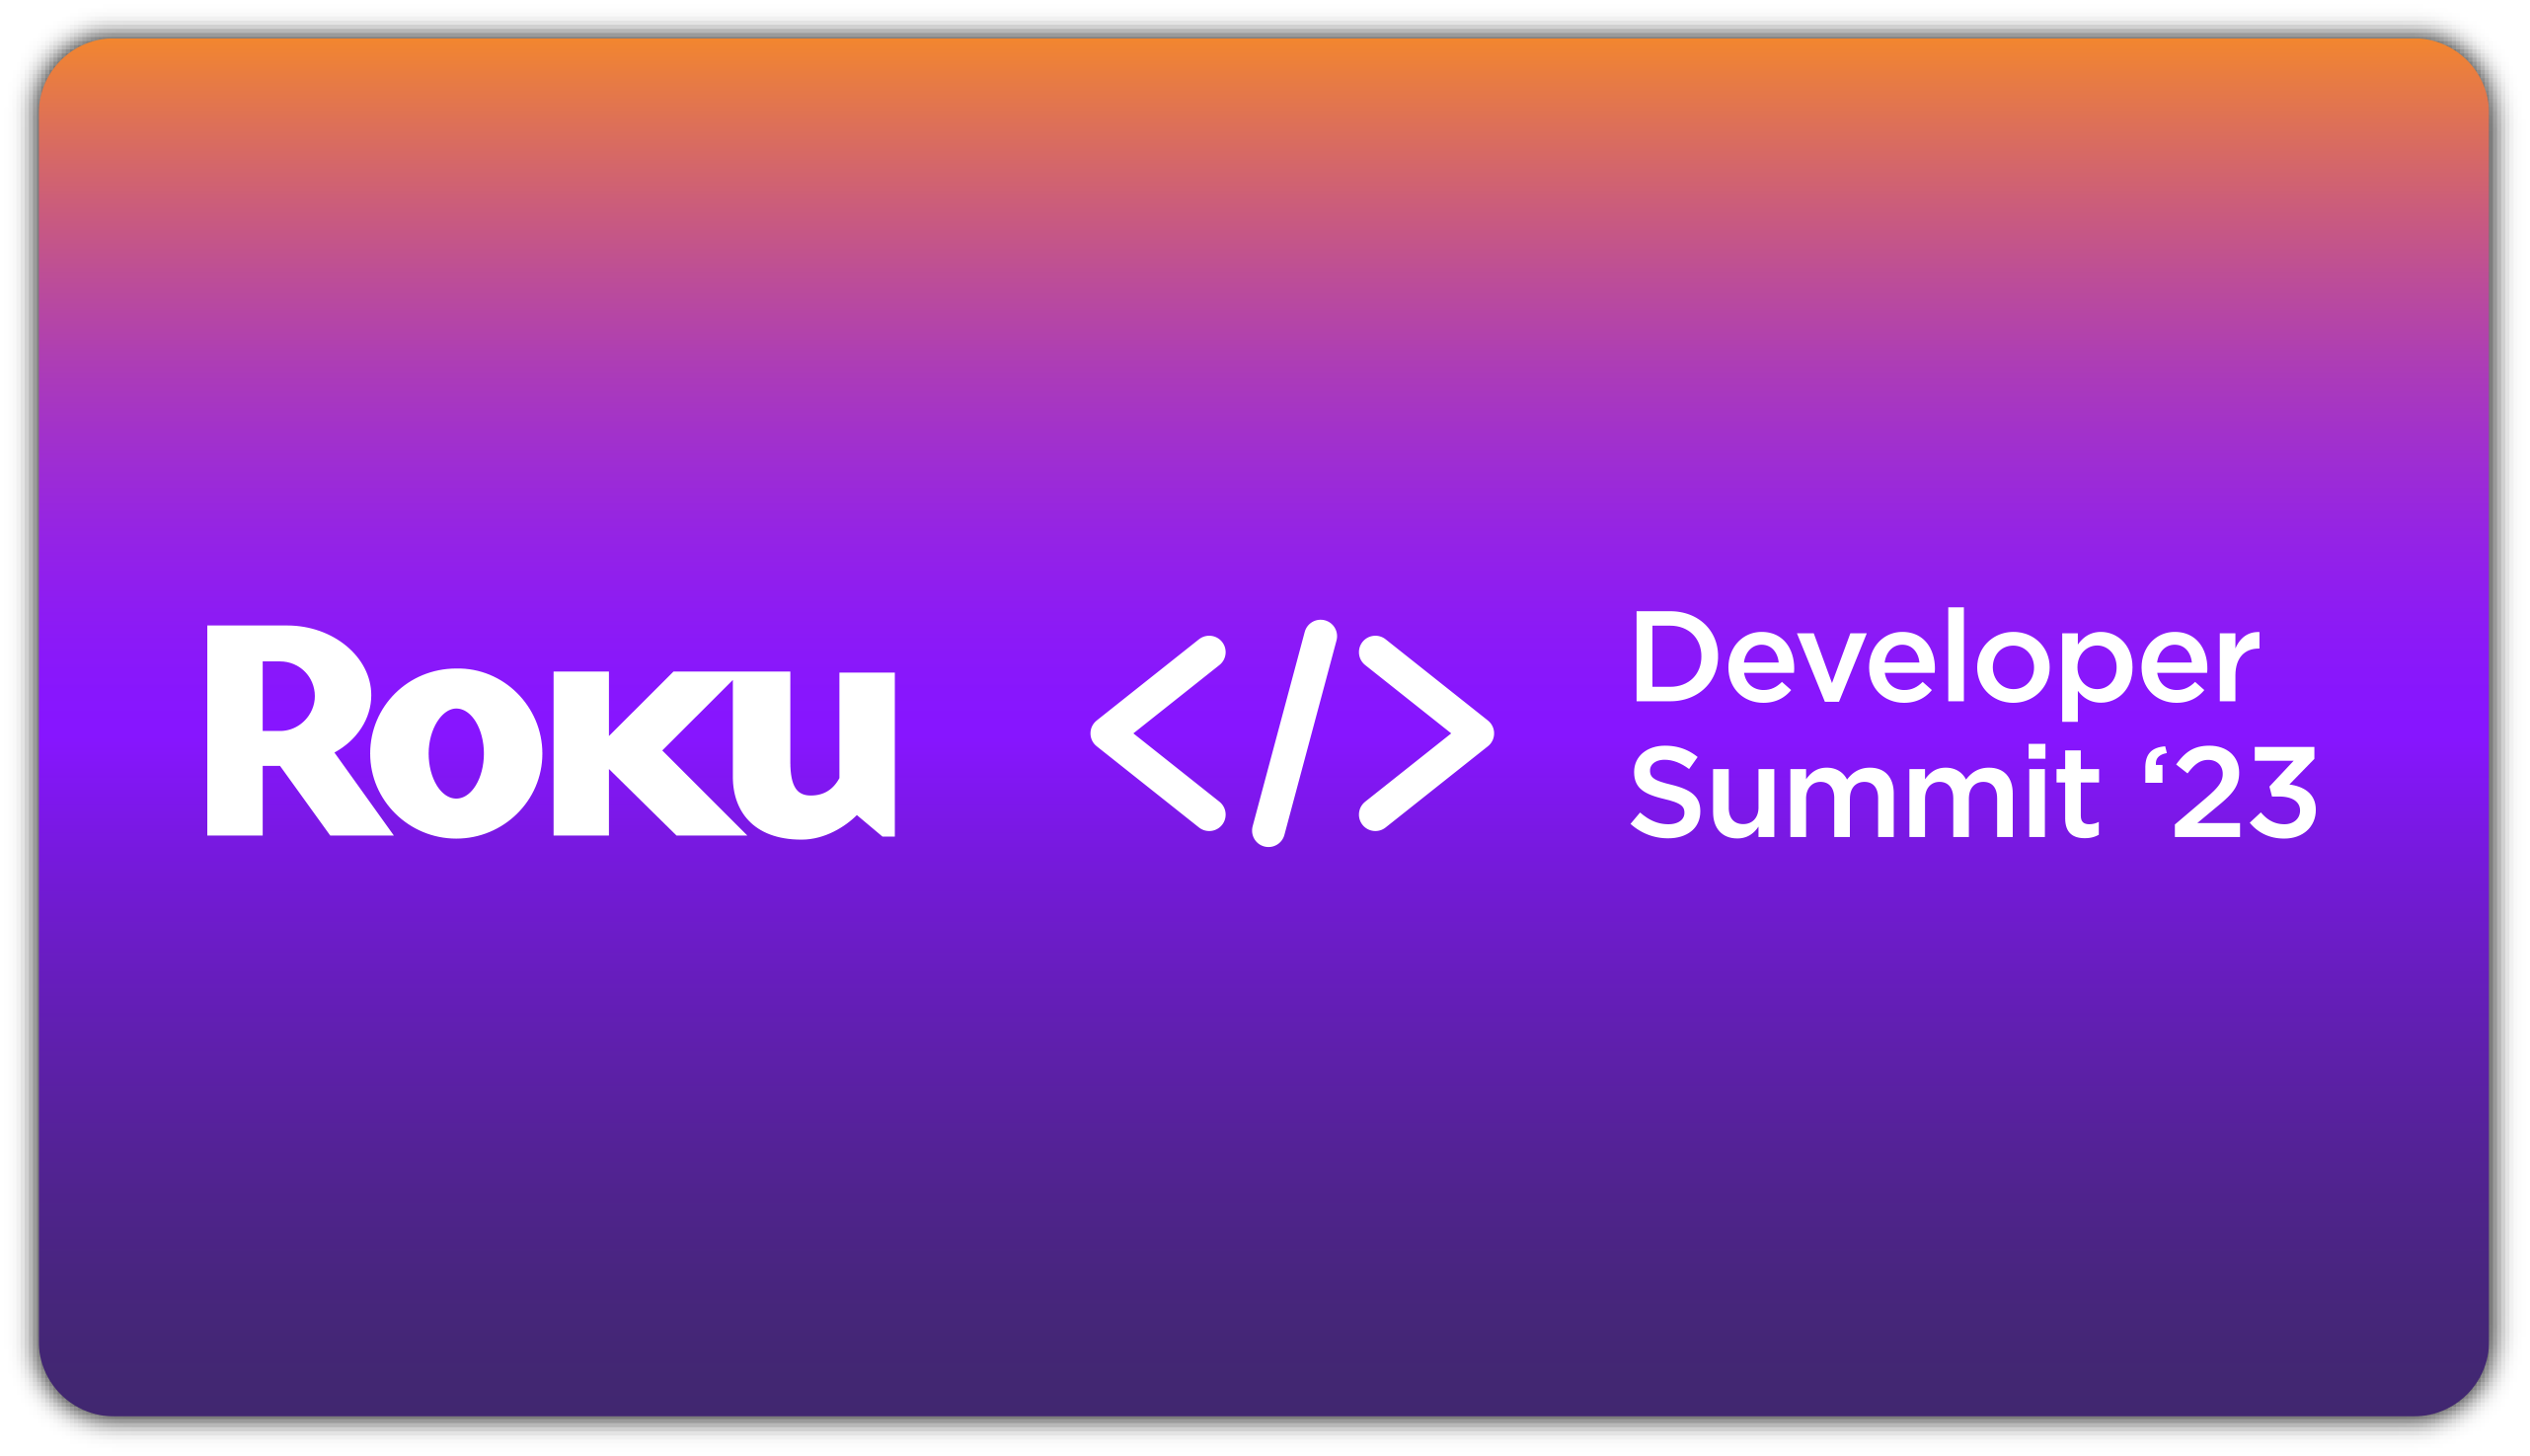 Roku Developer Summit 2023 logo